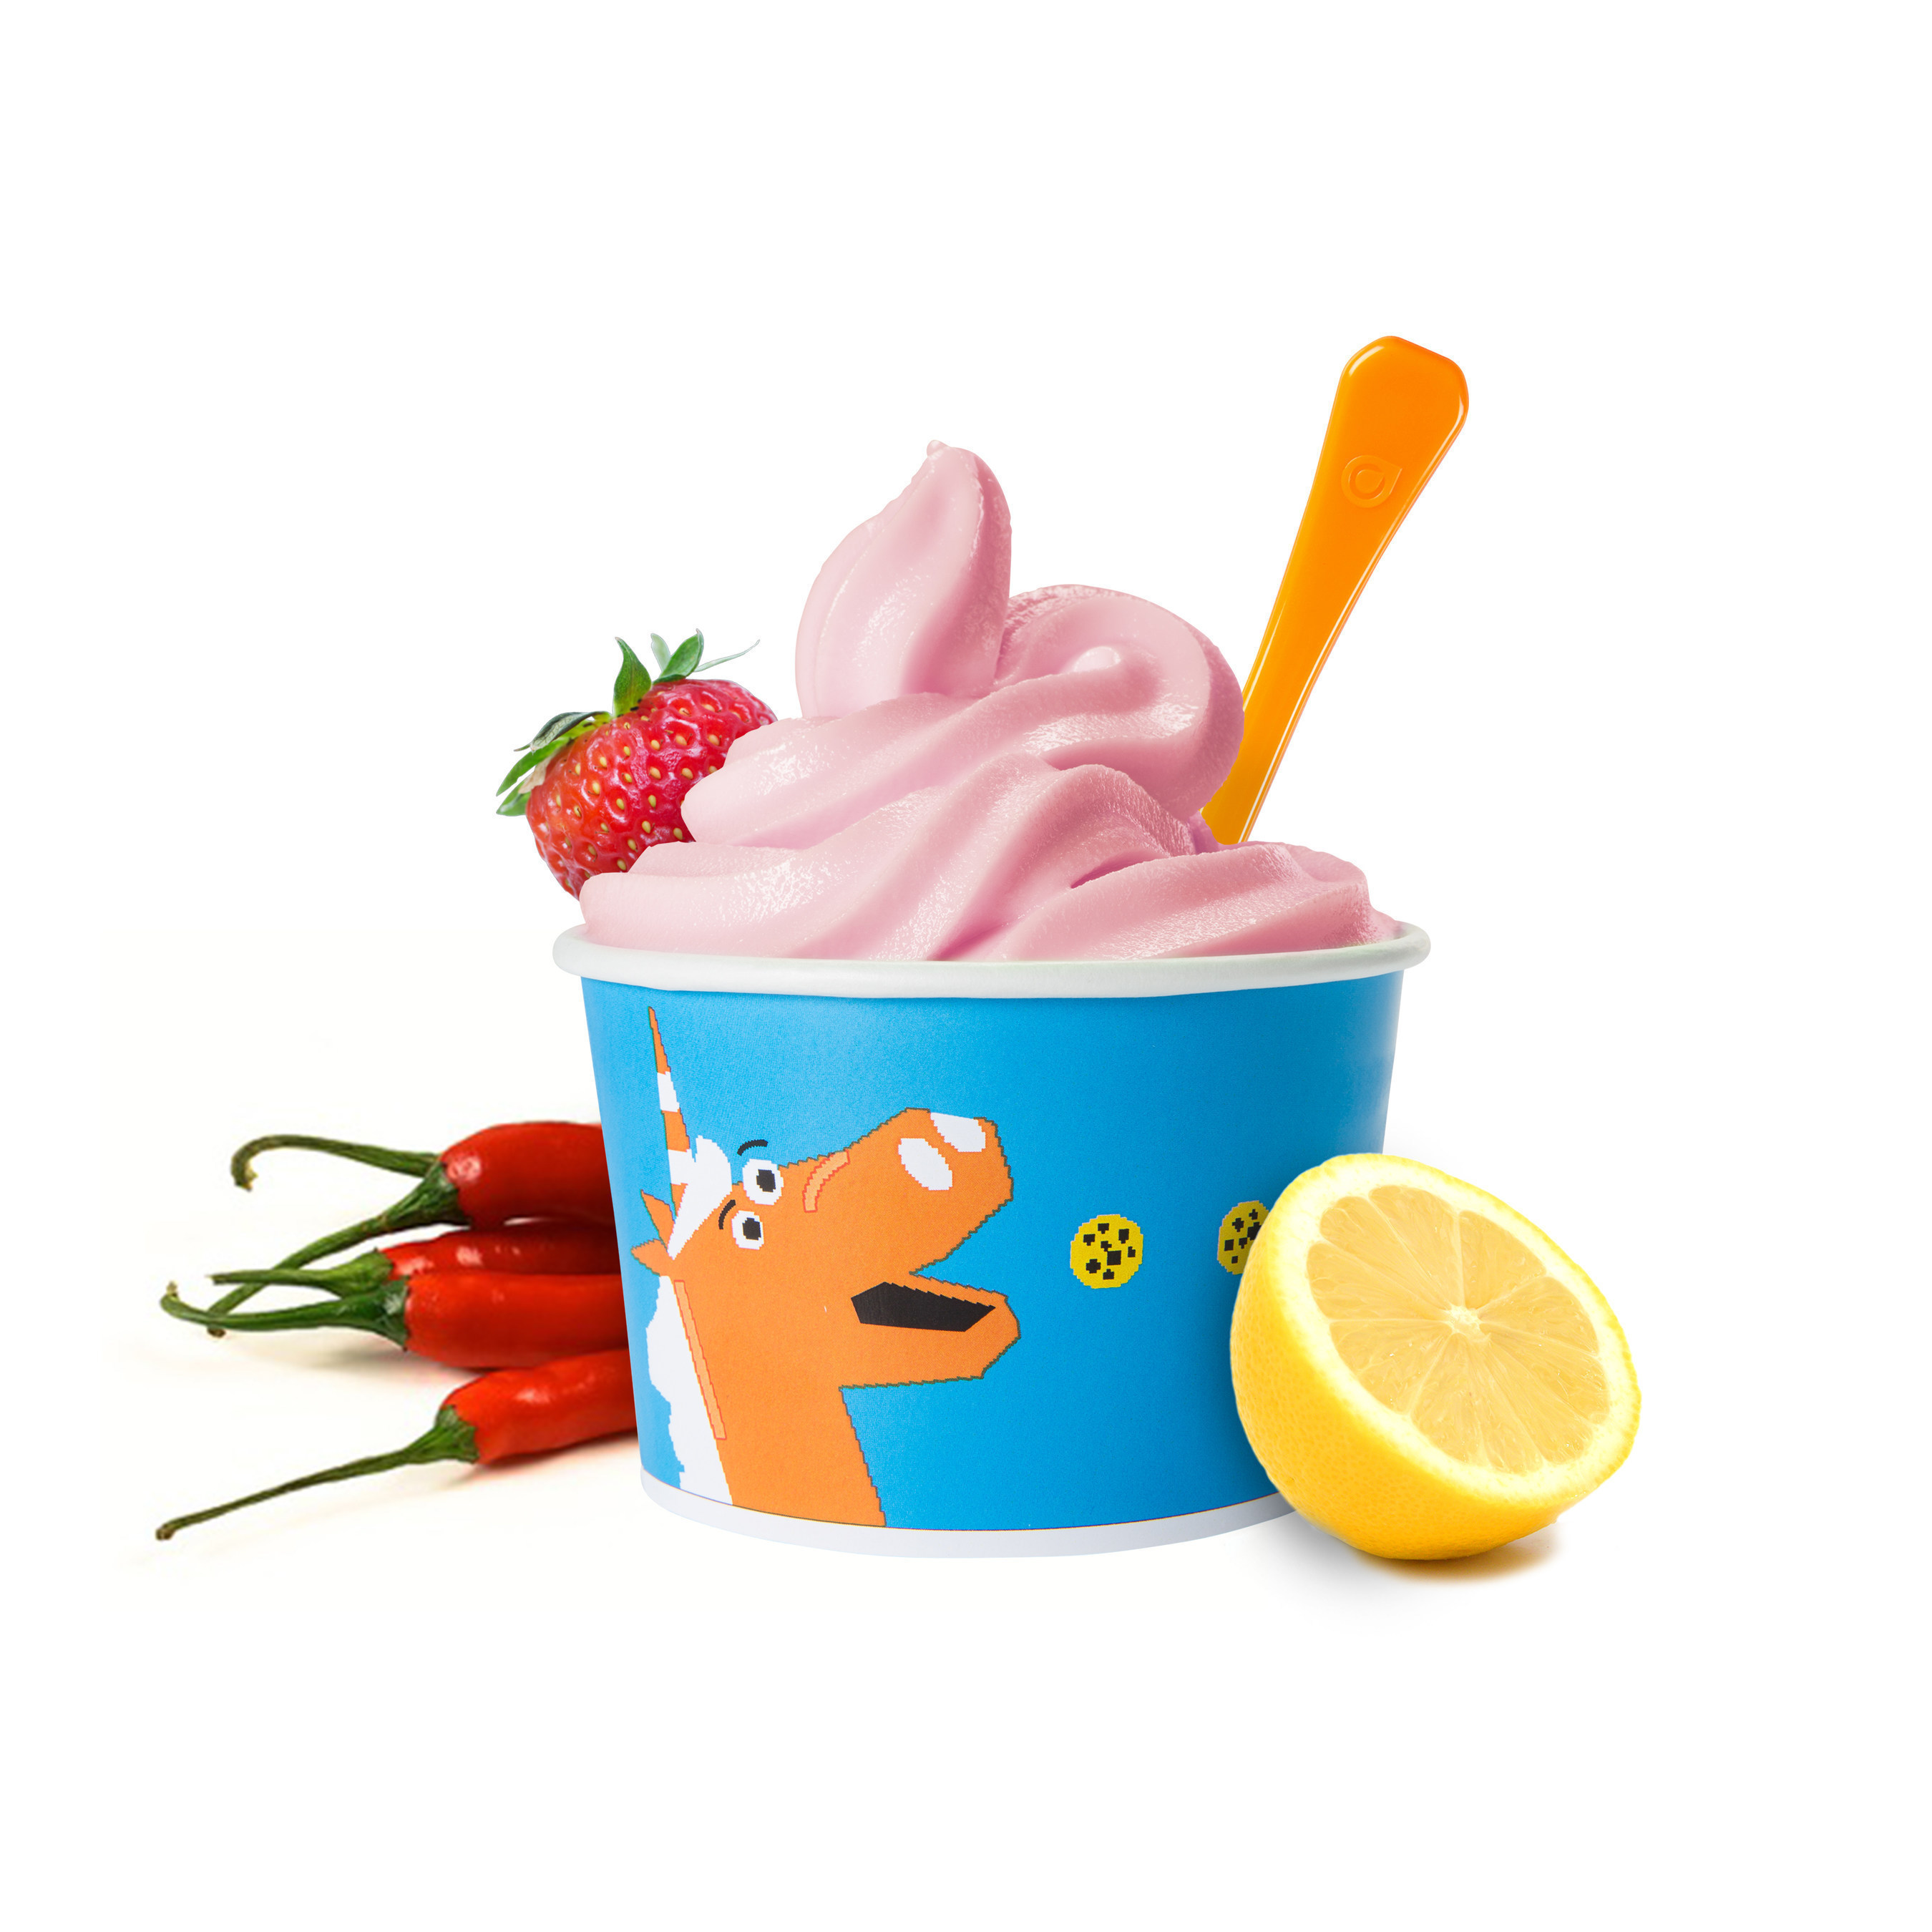 Orange leaf frozen yogurt selects mobivity to power mobile marketing program